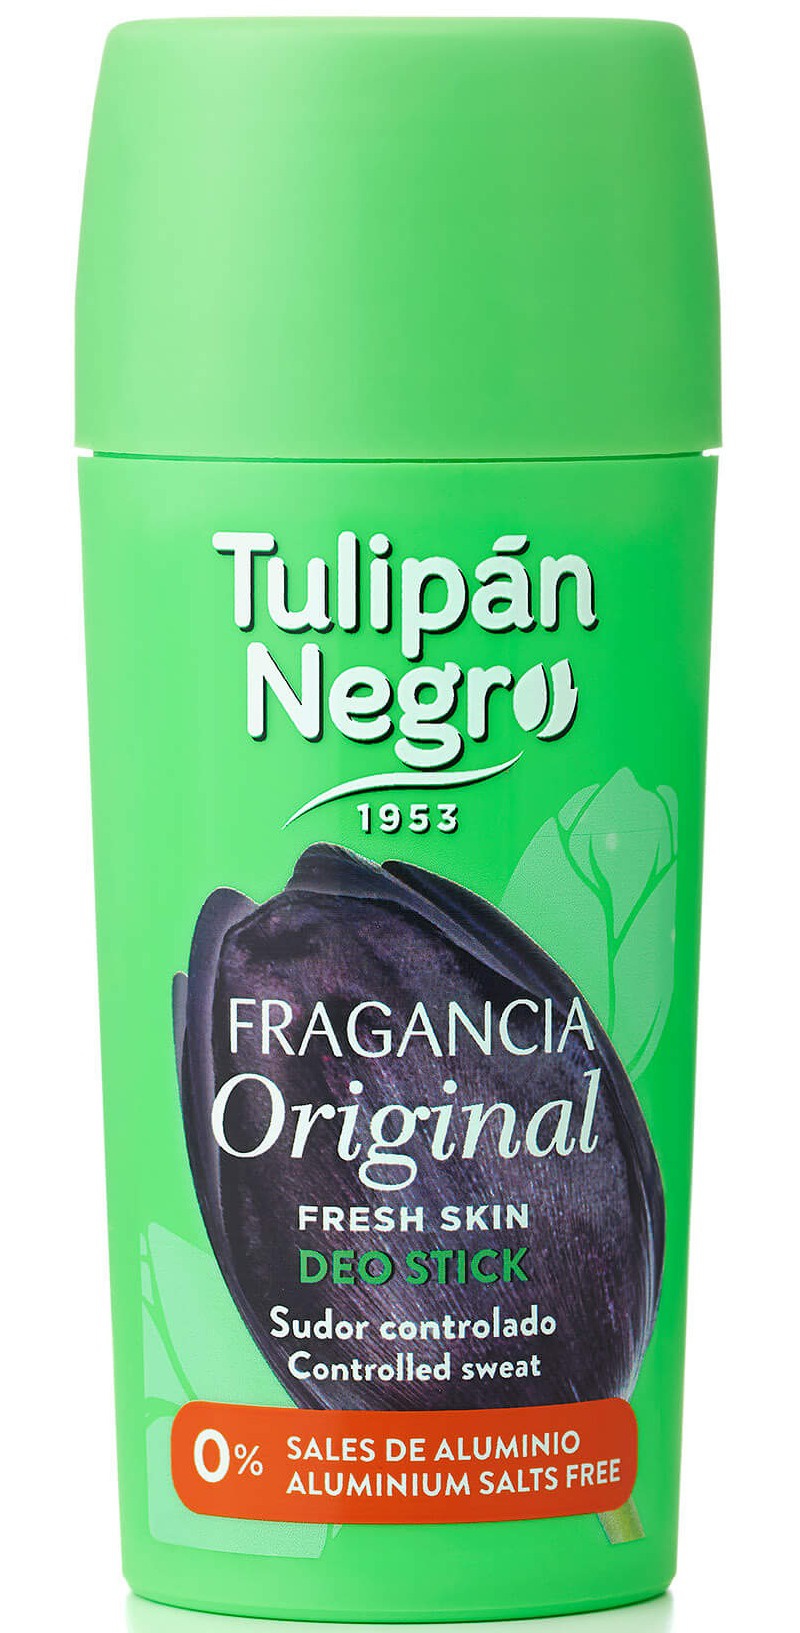 Tulipán Negro Original Deodorant Stick